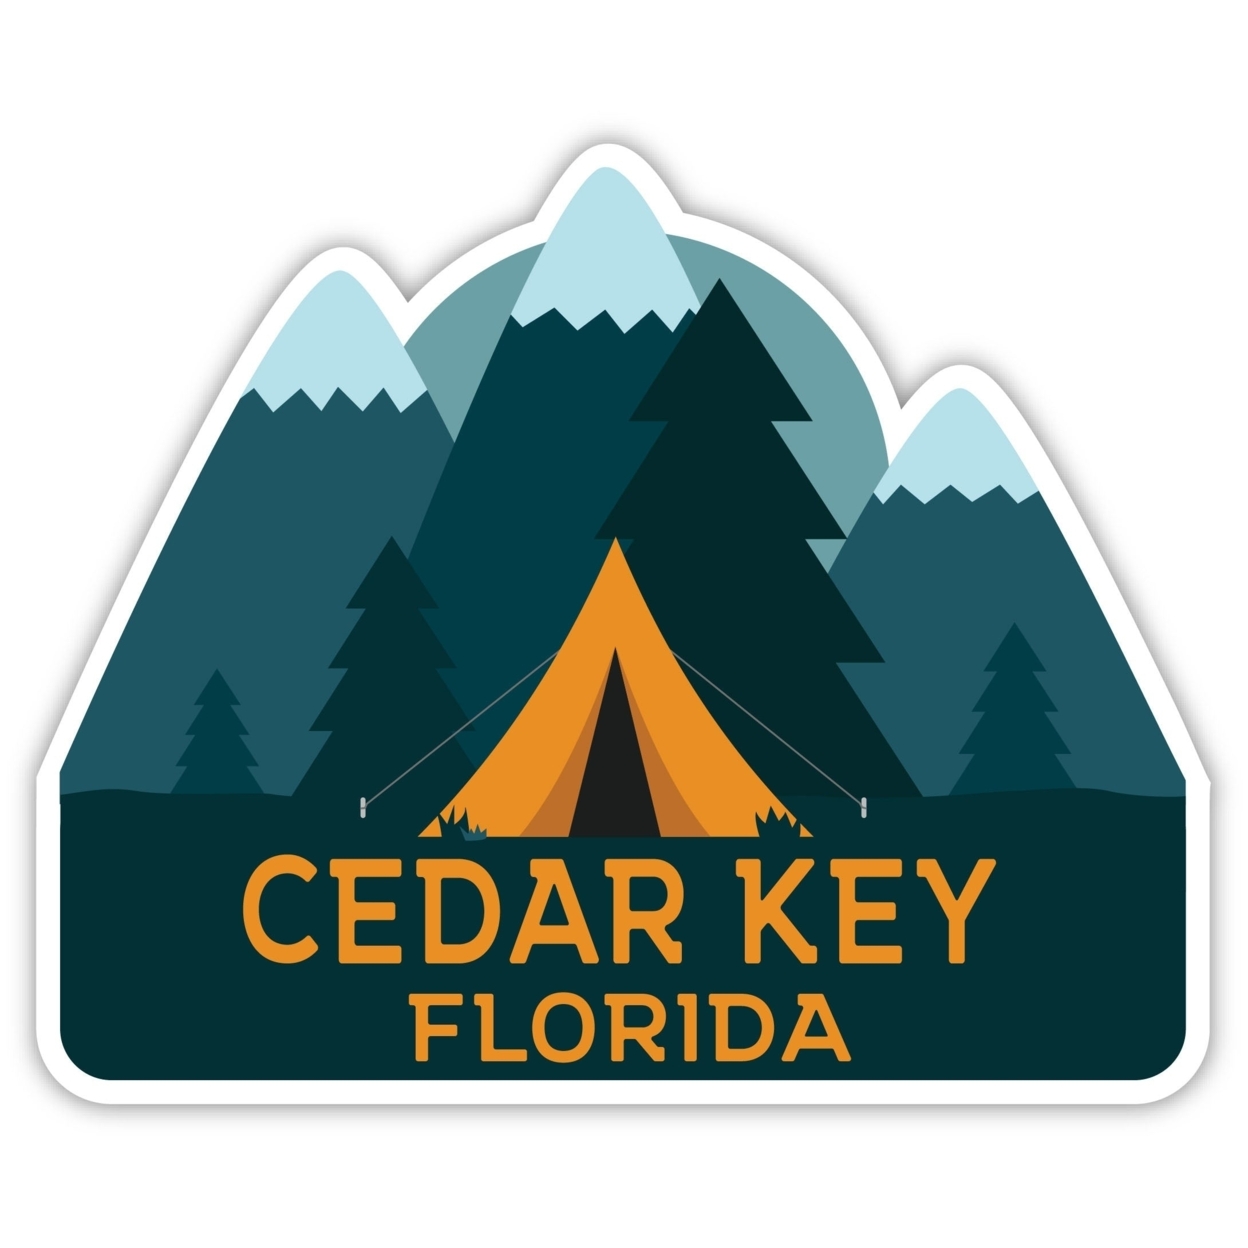 Cedar Key Florida Souvenir Decorative Stickers (Choose Theme And Size) - 4-Pack, 4-Inch, Tent